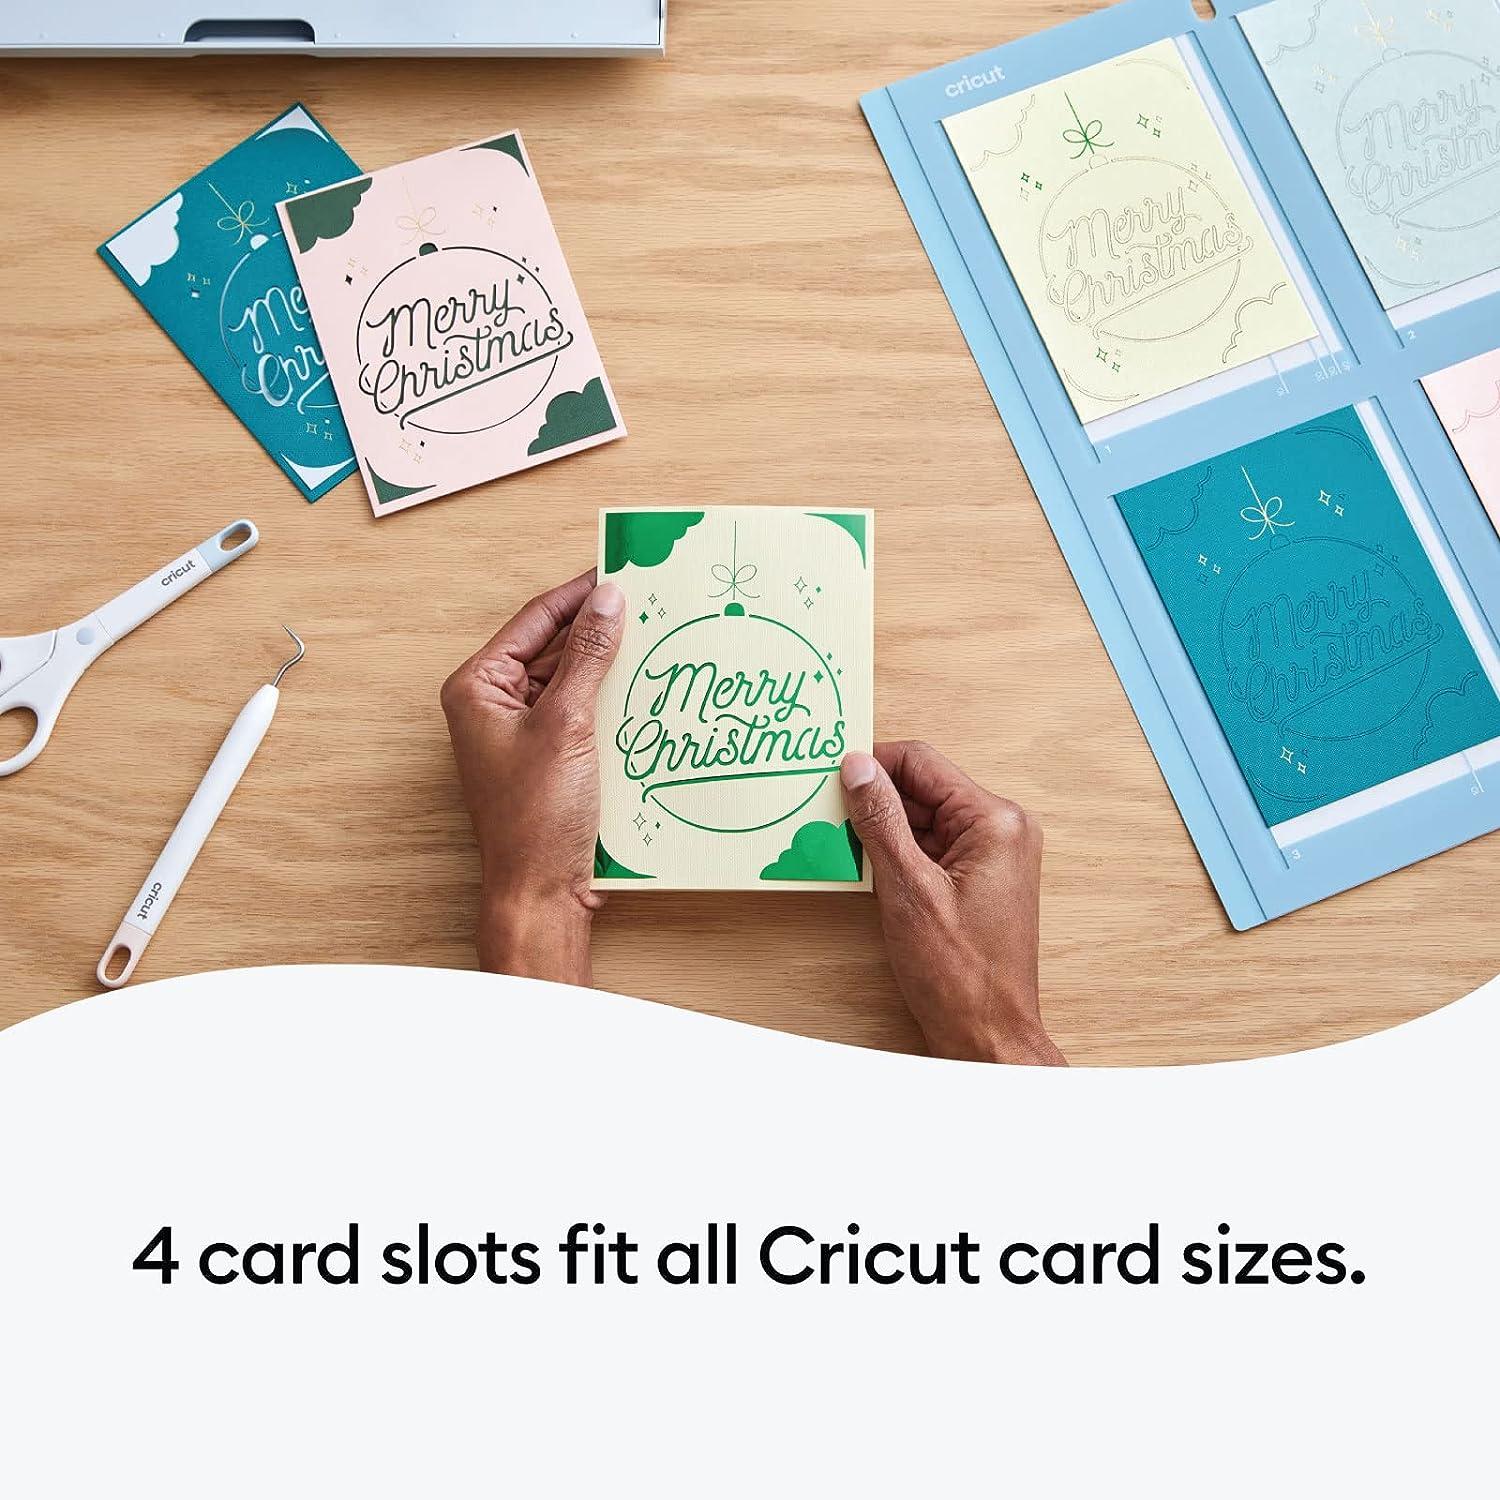 Cricut Joy Cutaway Card Project